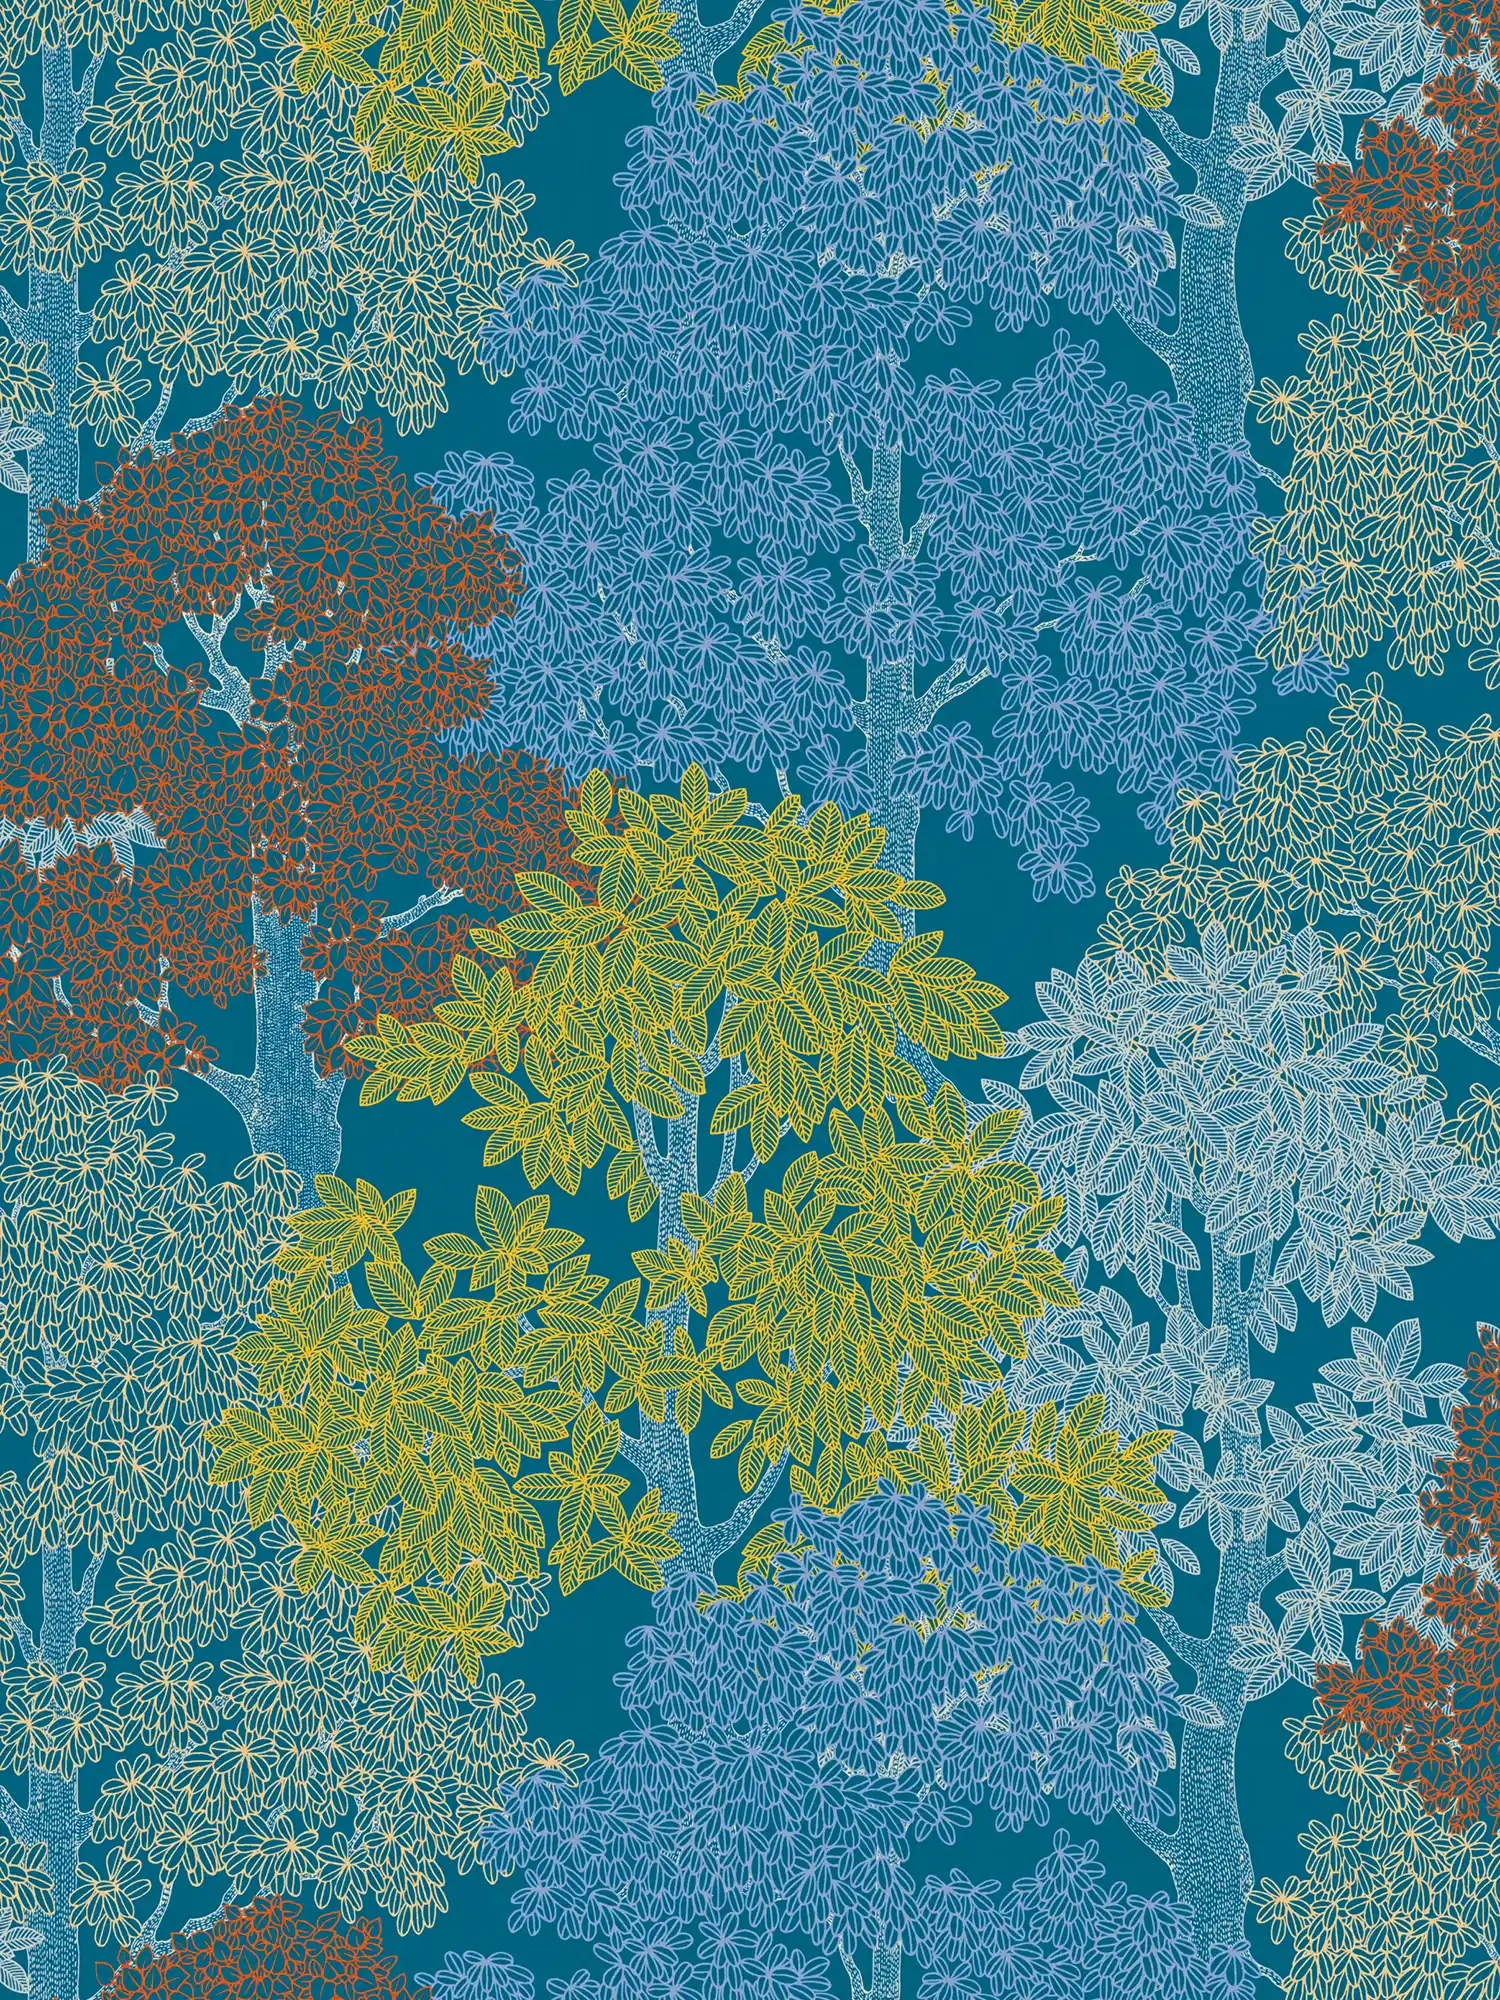         wallpaper trees pattern in Scandinavian style - blue, yellow, red
    